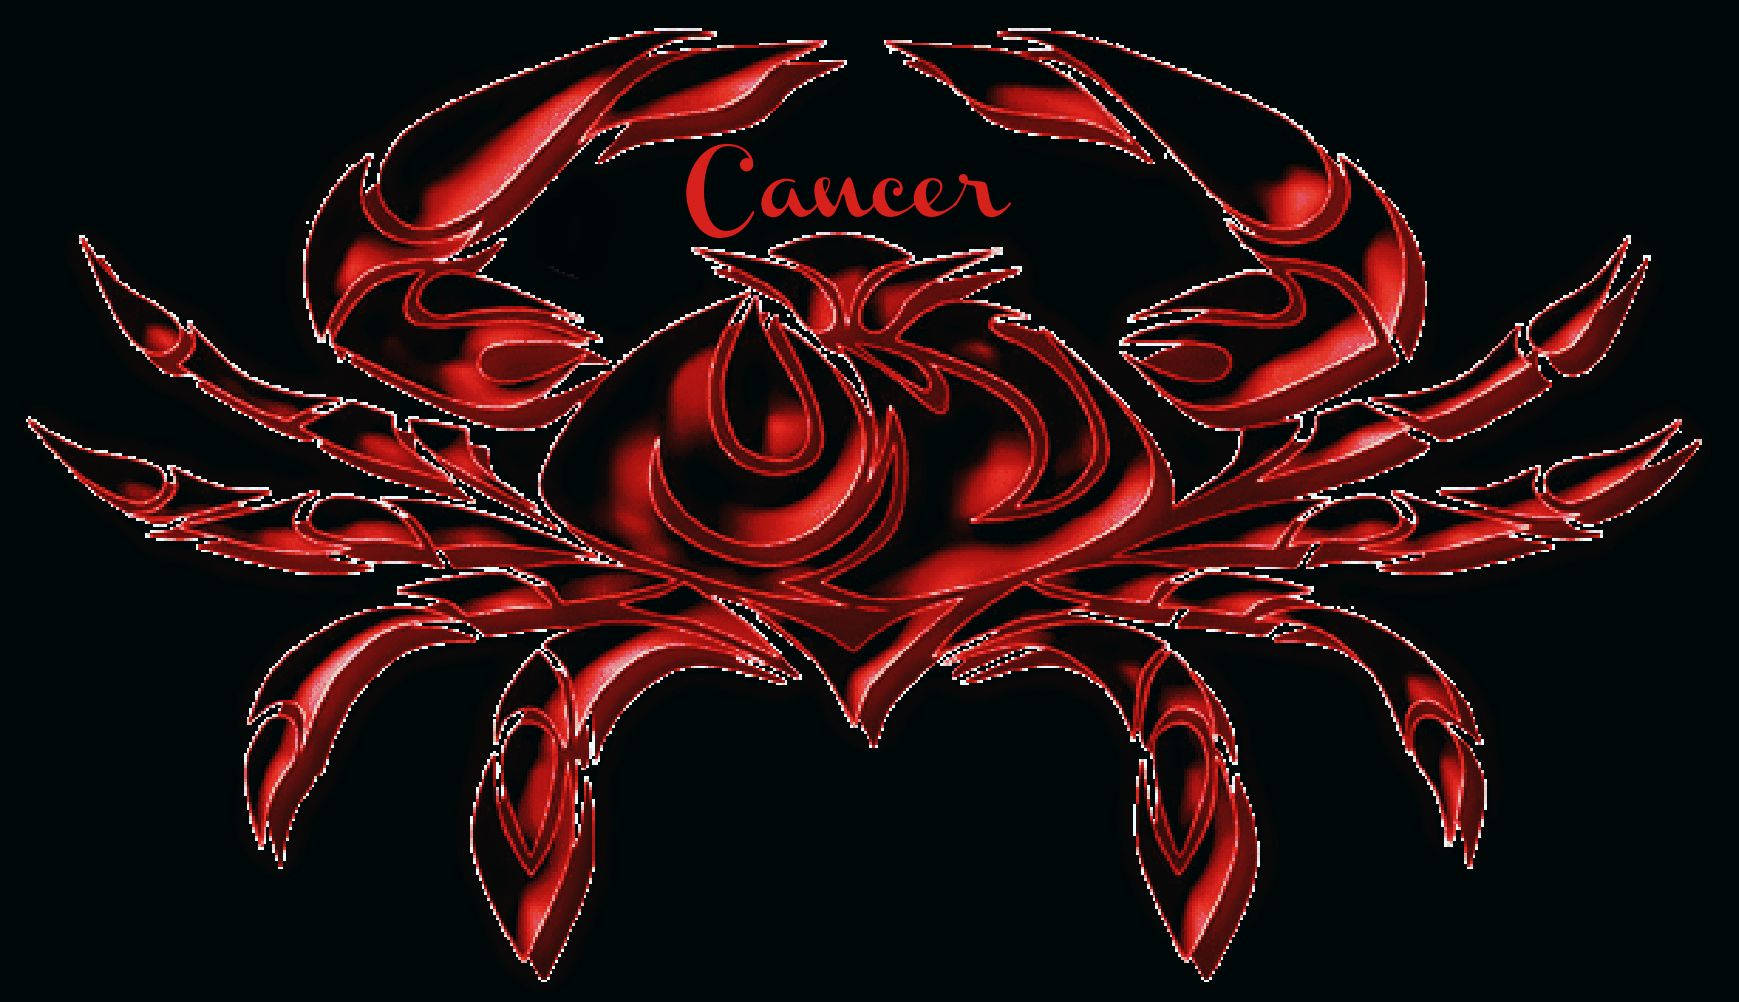 Striking Digital Art Of A Red Cancer Crab Wallpaper